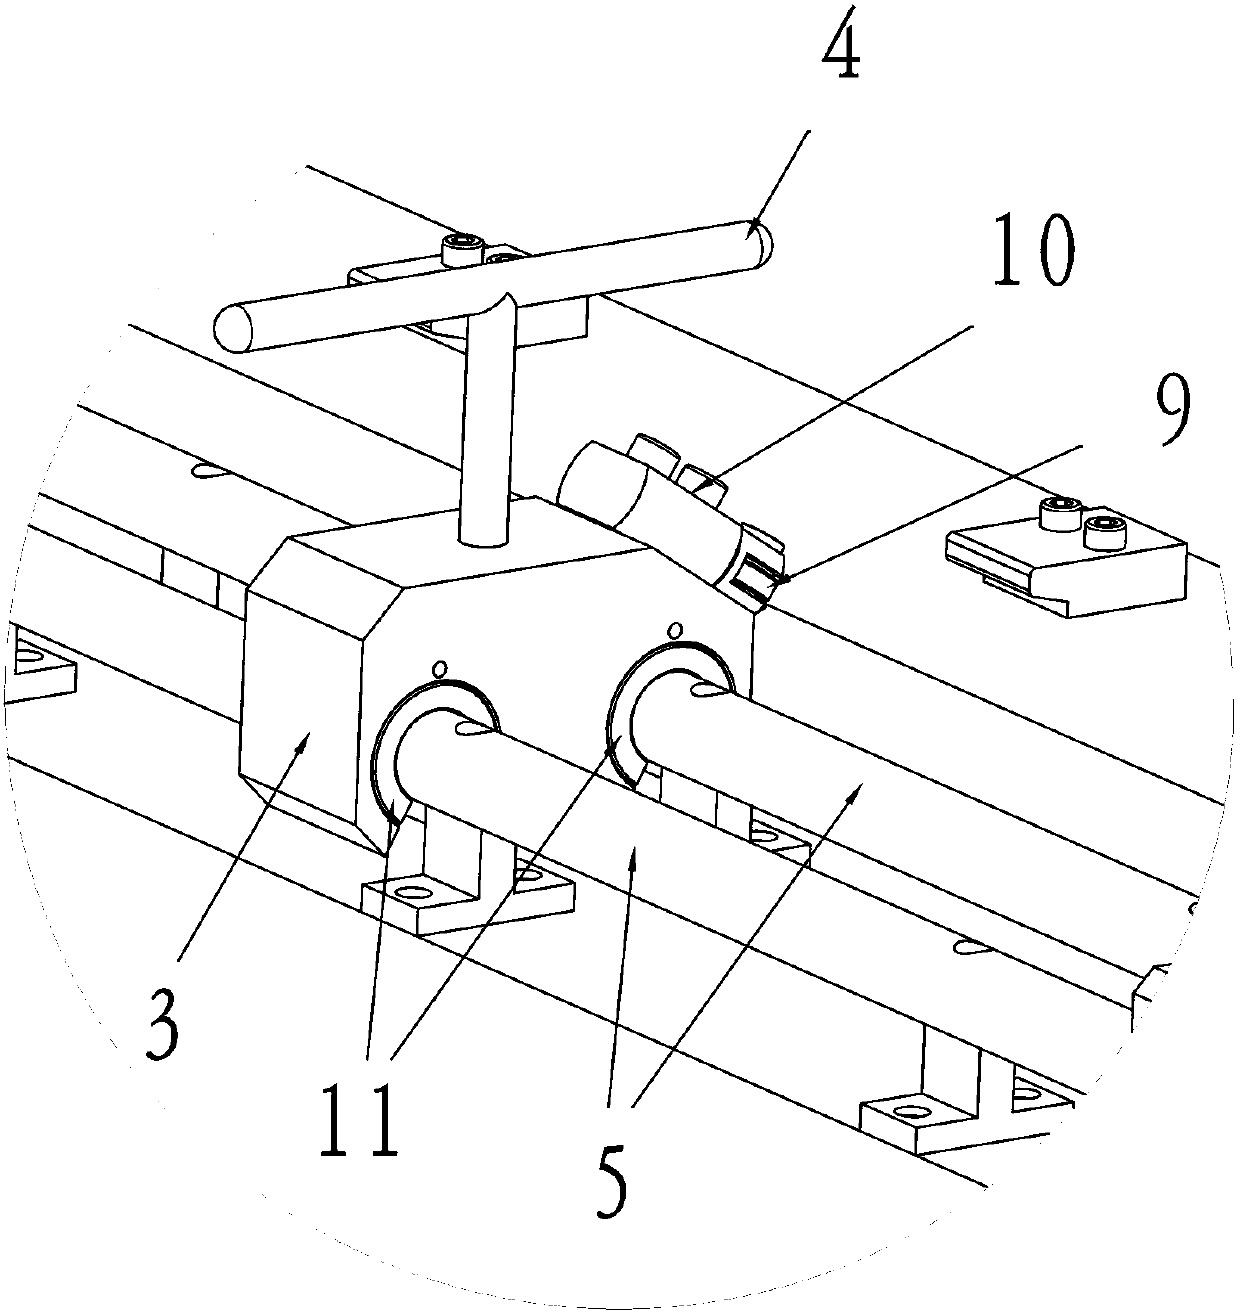 Rivet rolling device for collar suturing needle rake for knitting suturing machine